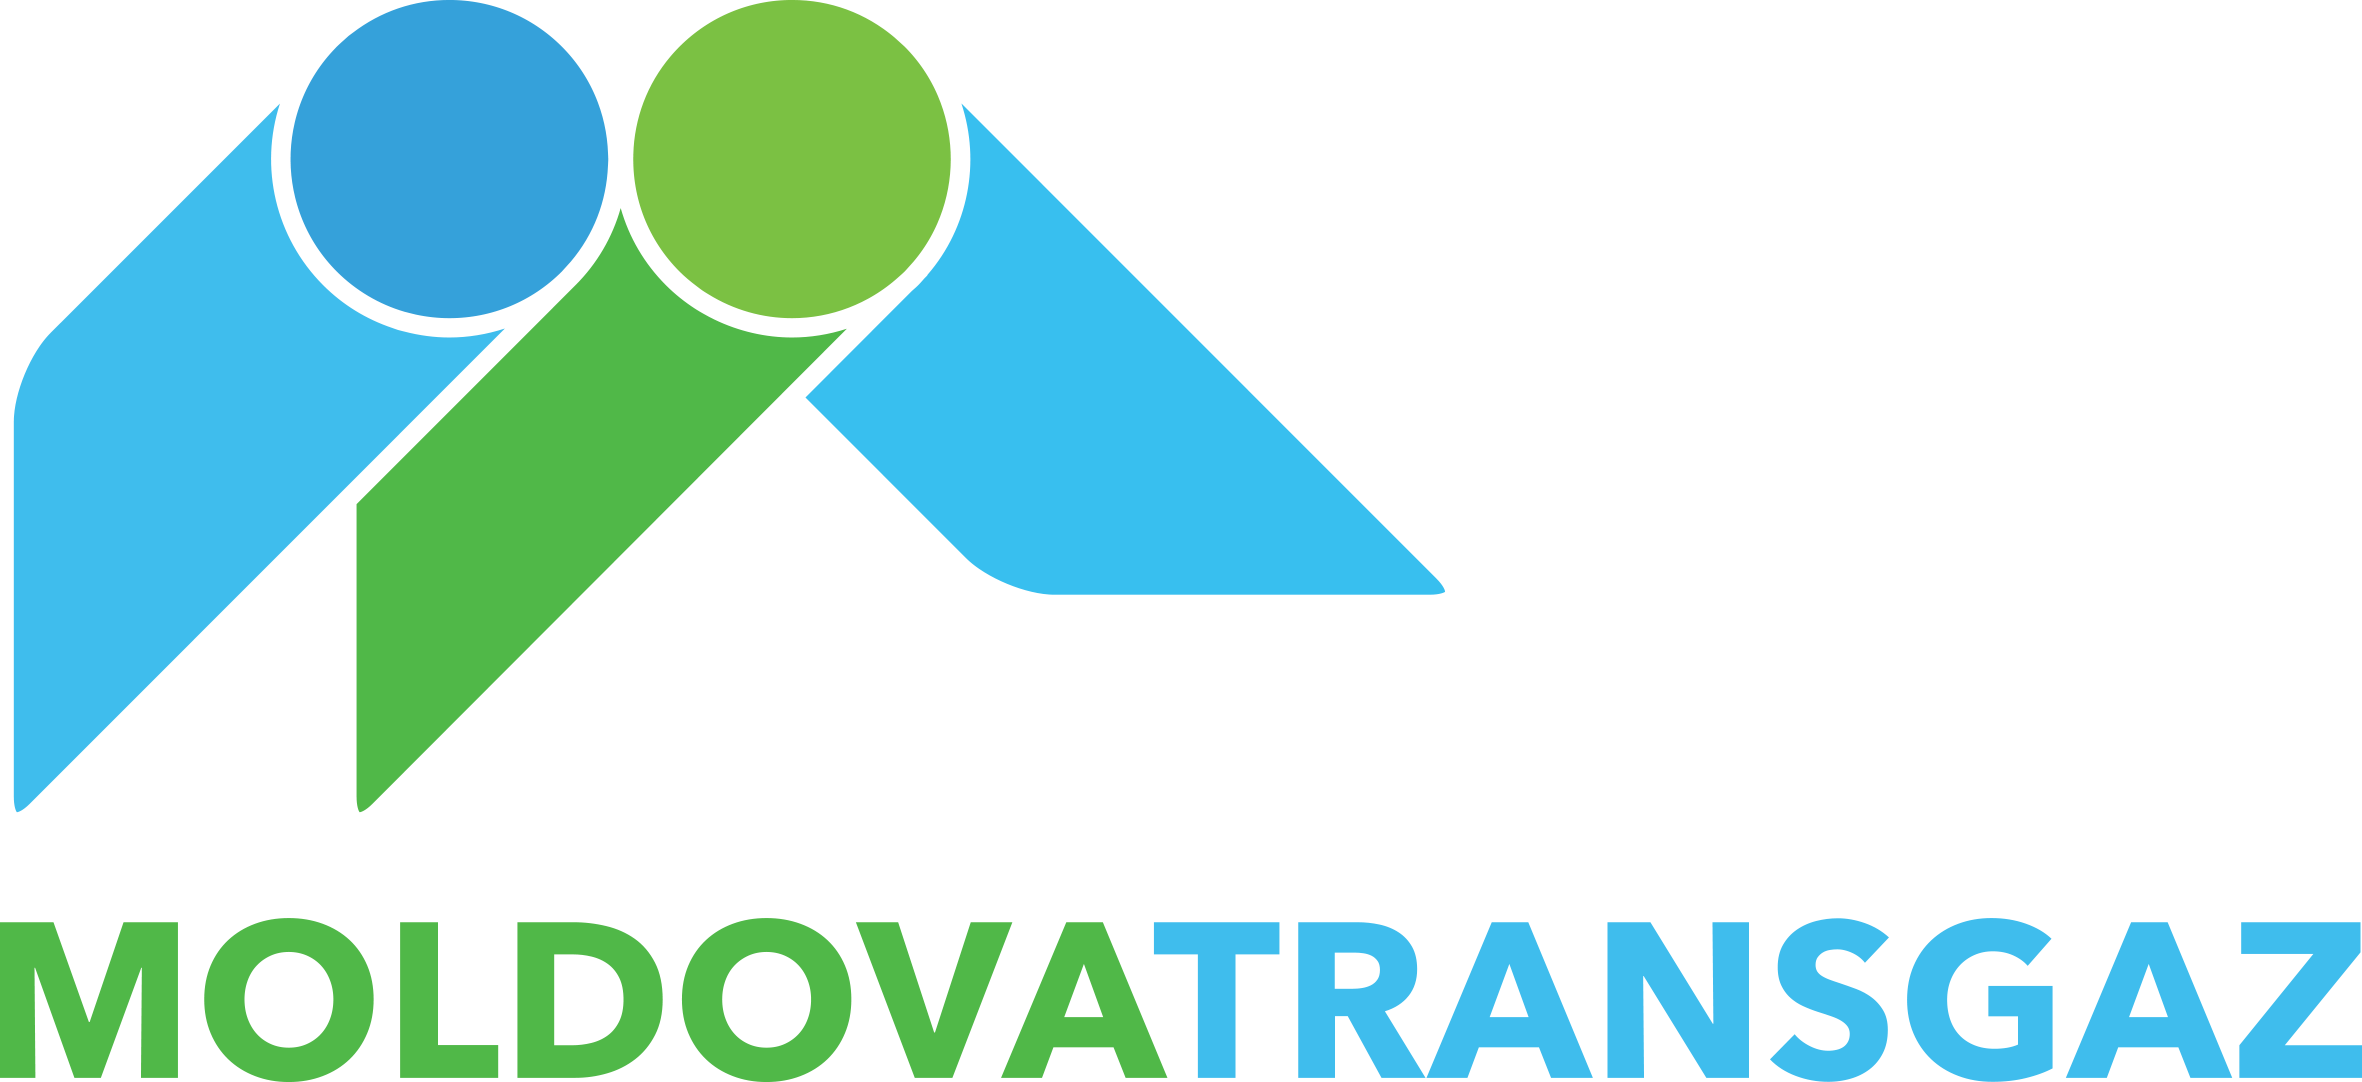 Moldovatransgaz Logo